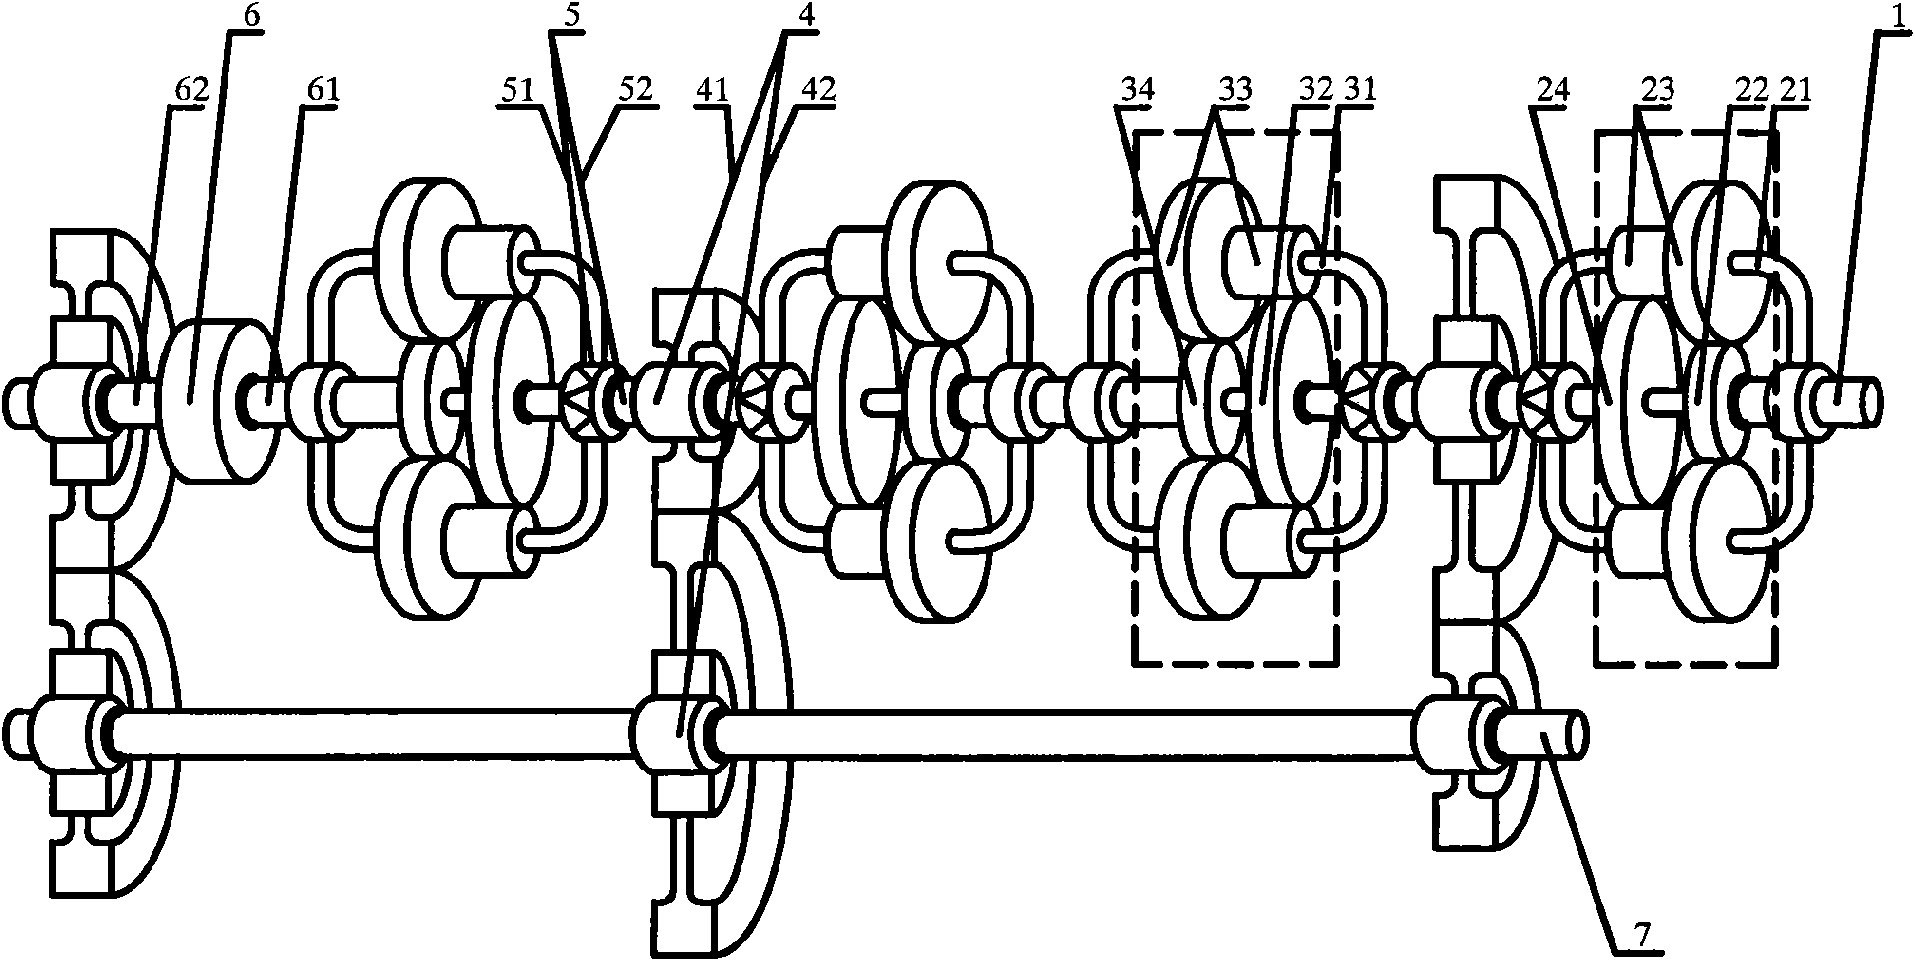 Multi-gear simultaneous meshing variable speed unit